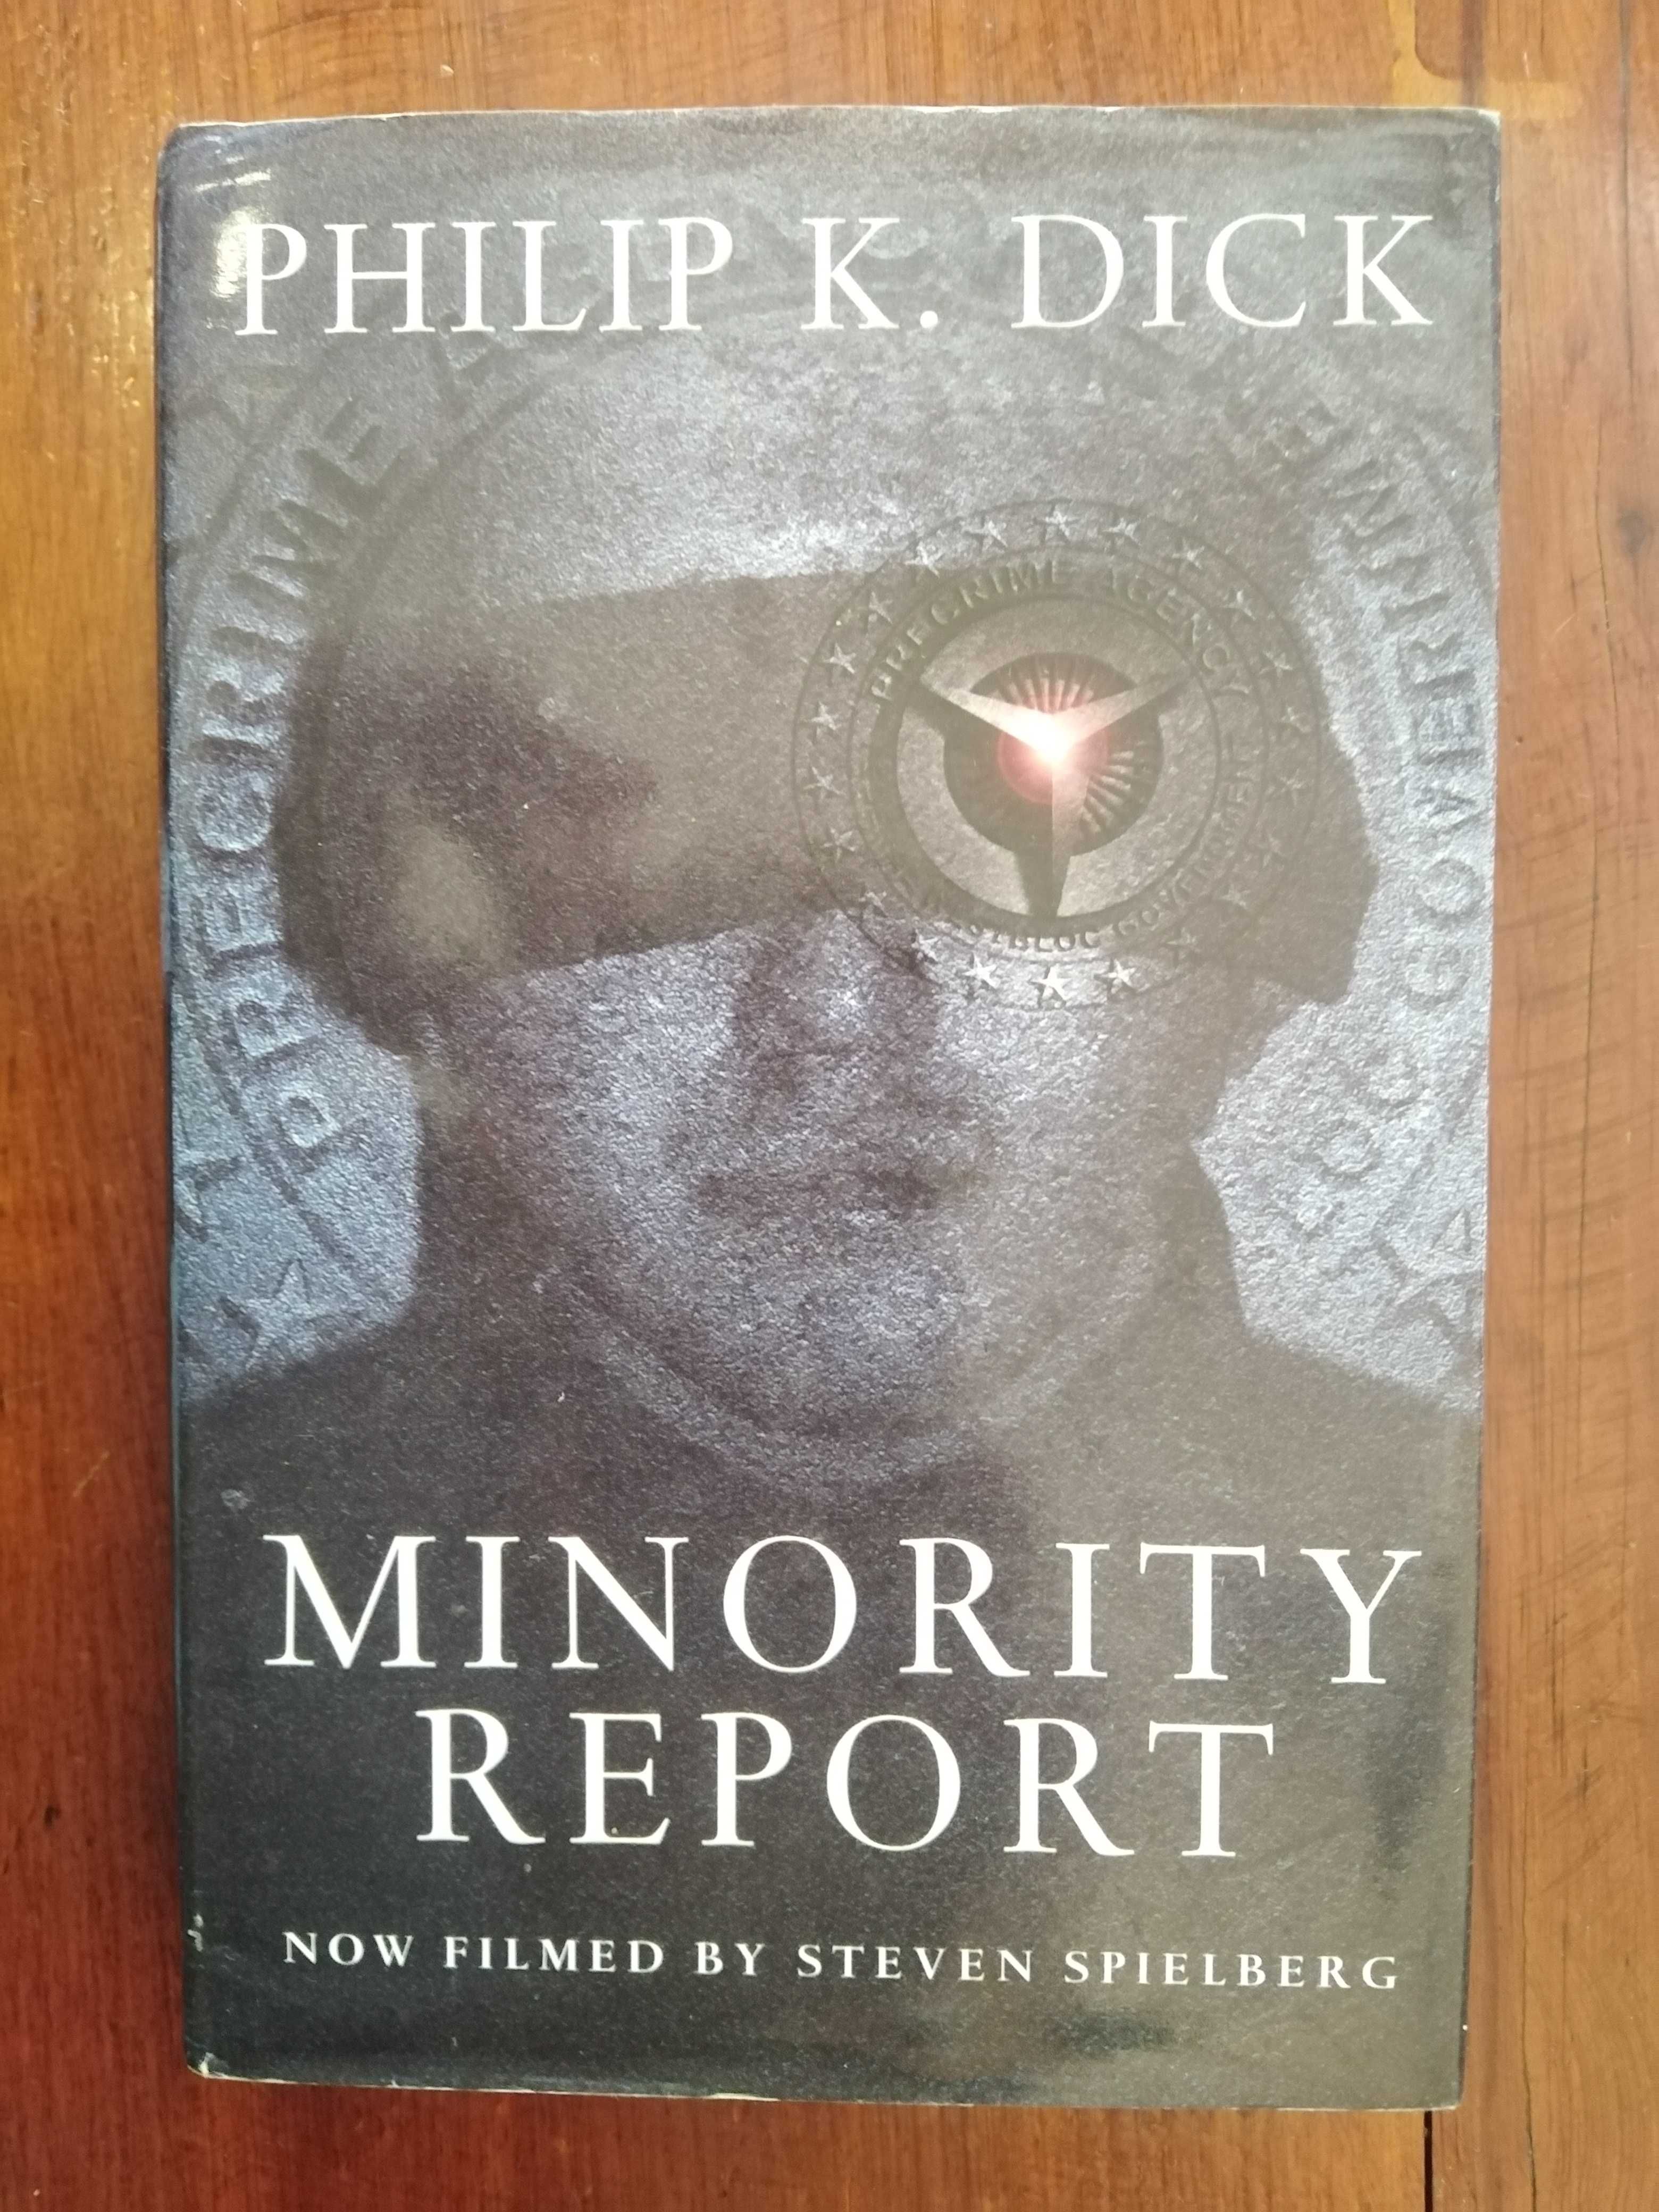 Phillip K. Dick - Minority Report